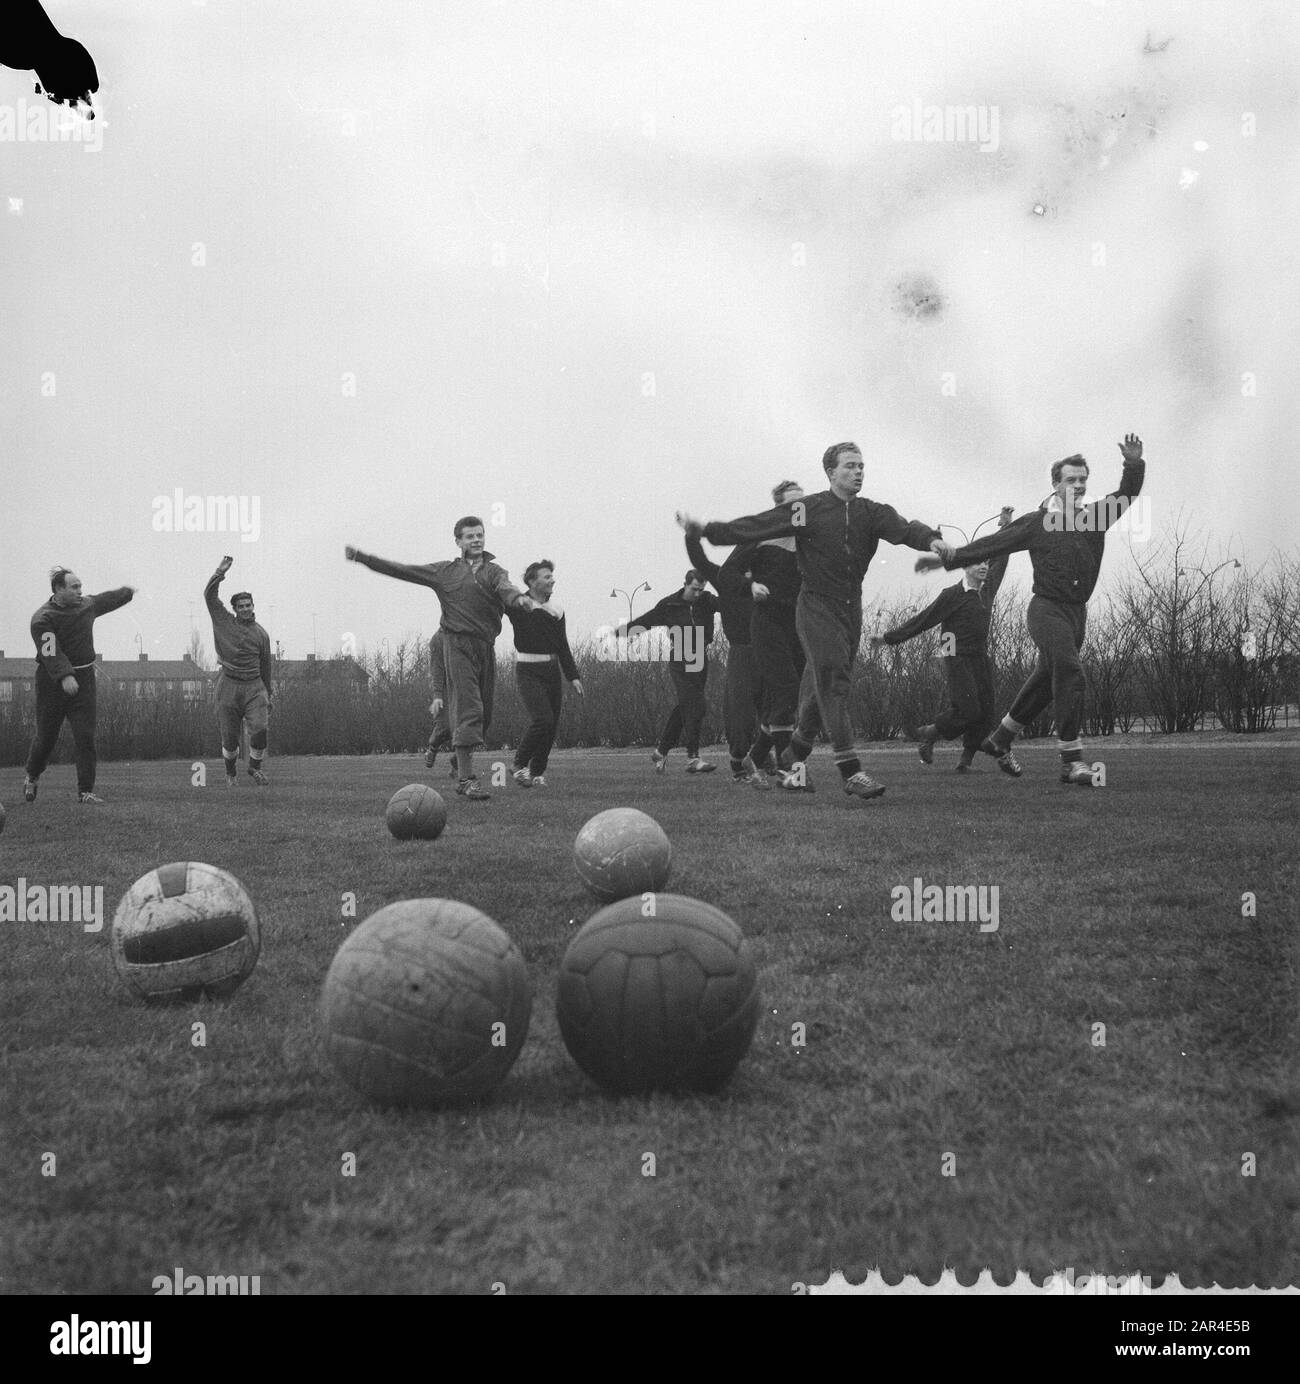 Training of the Dutch team in Den Bosch Date: 18 March 1958 Location: Den Bosch Keywords: sport, football Institution name: Dutch national team Stock Photo